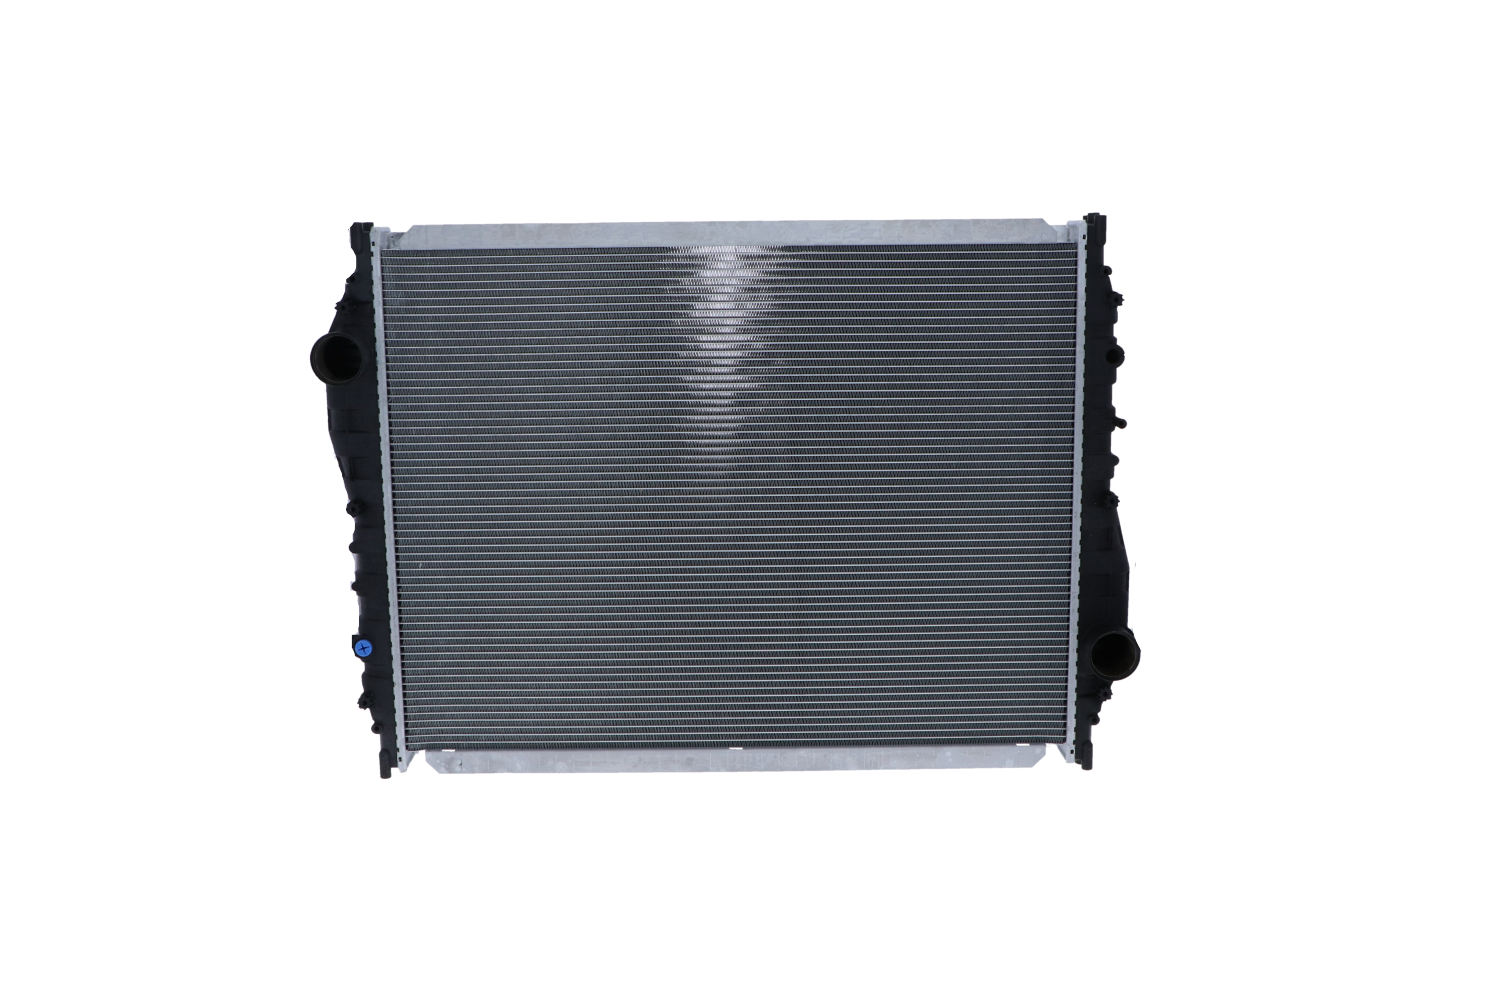 NRF Aluminium, 850 x 638 x 56 mm, without frame, Brazed cooling fins Radiator 509887 buy